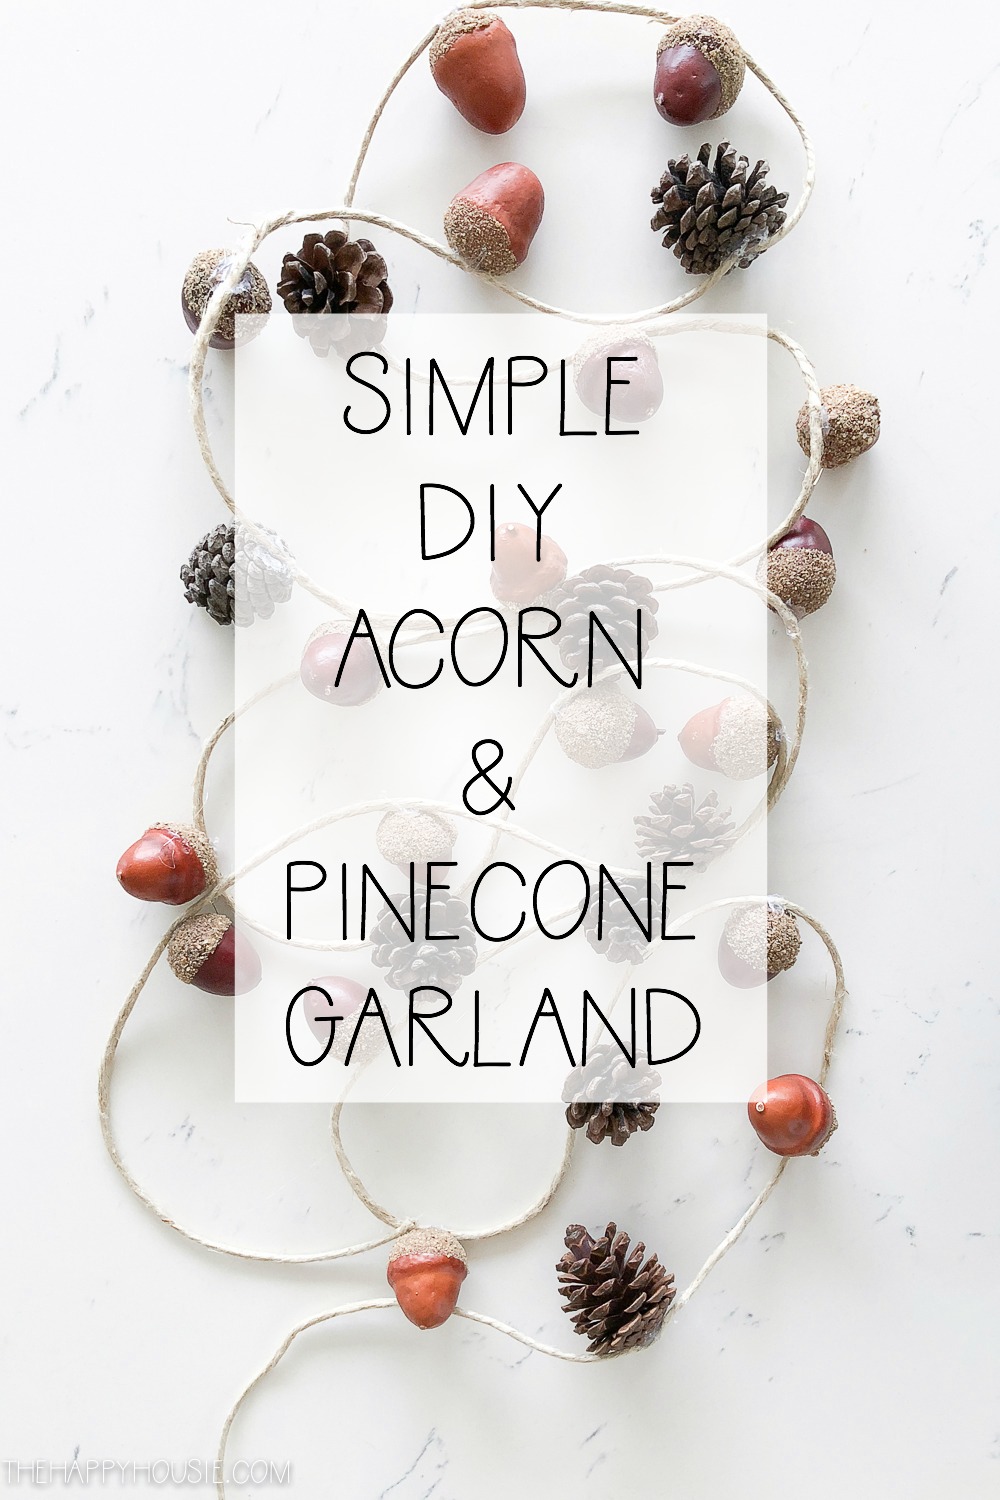 Simple DIY Acorn & Pinecone Garland graphic.